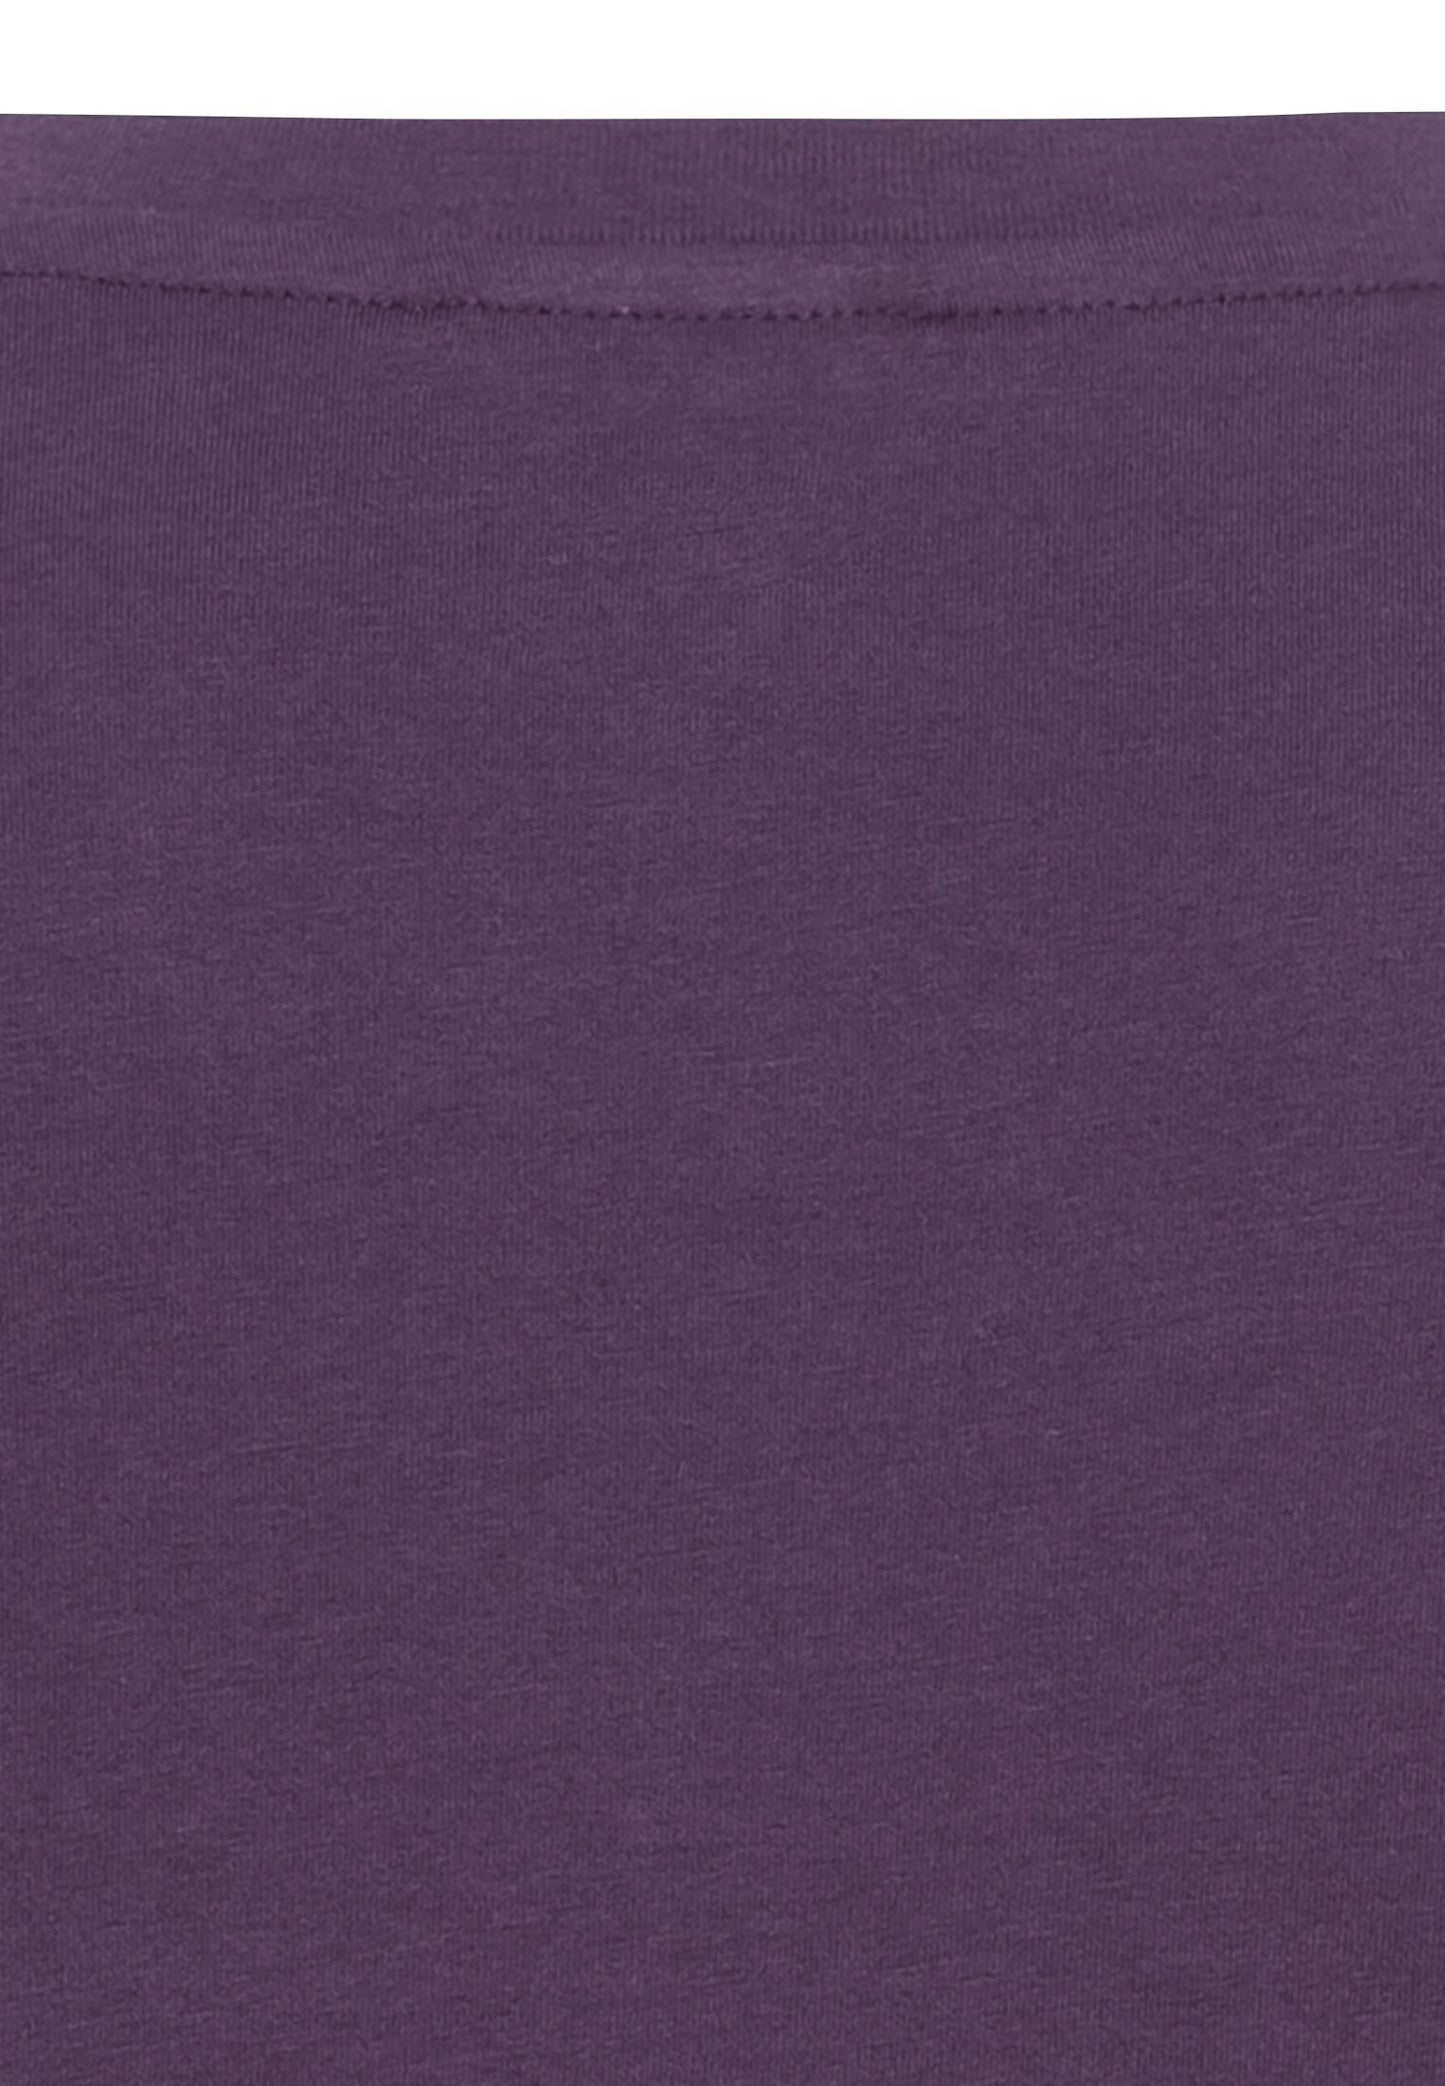 Kurzarm T-Shirt aus Organic Cotton (Lavender)